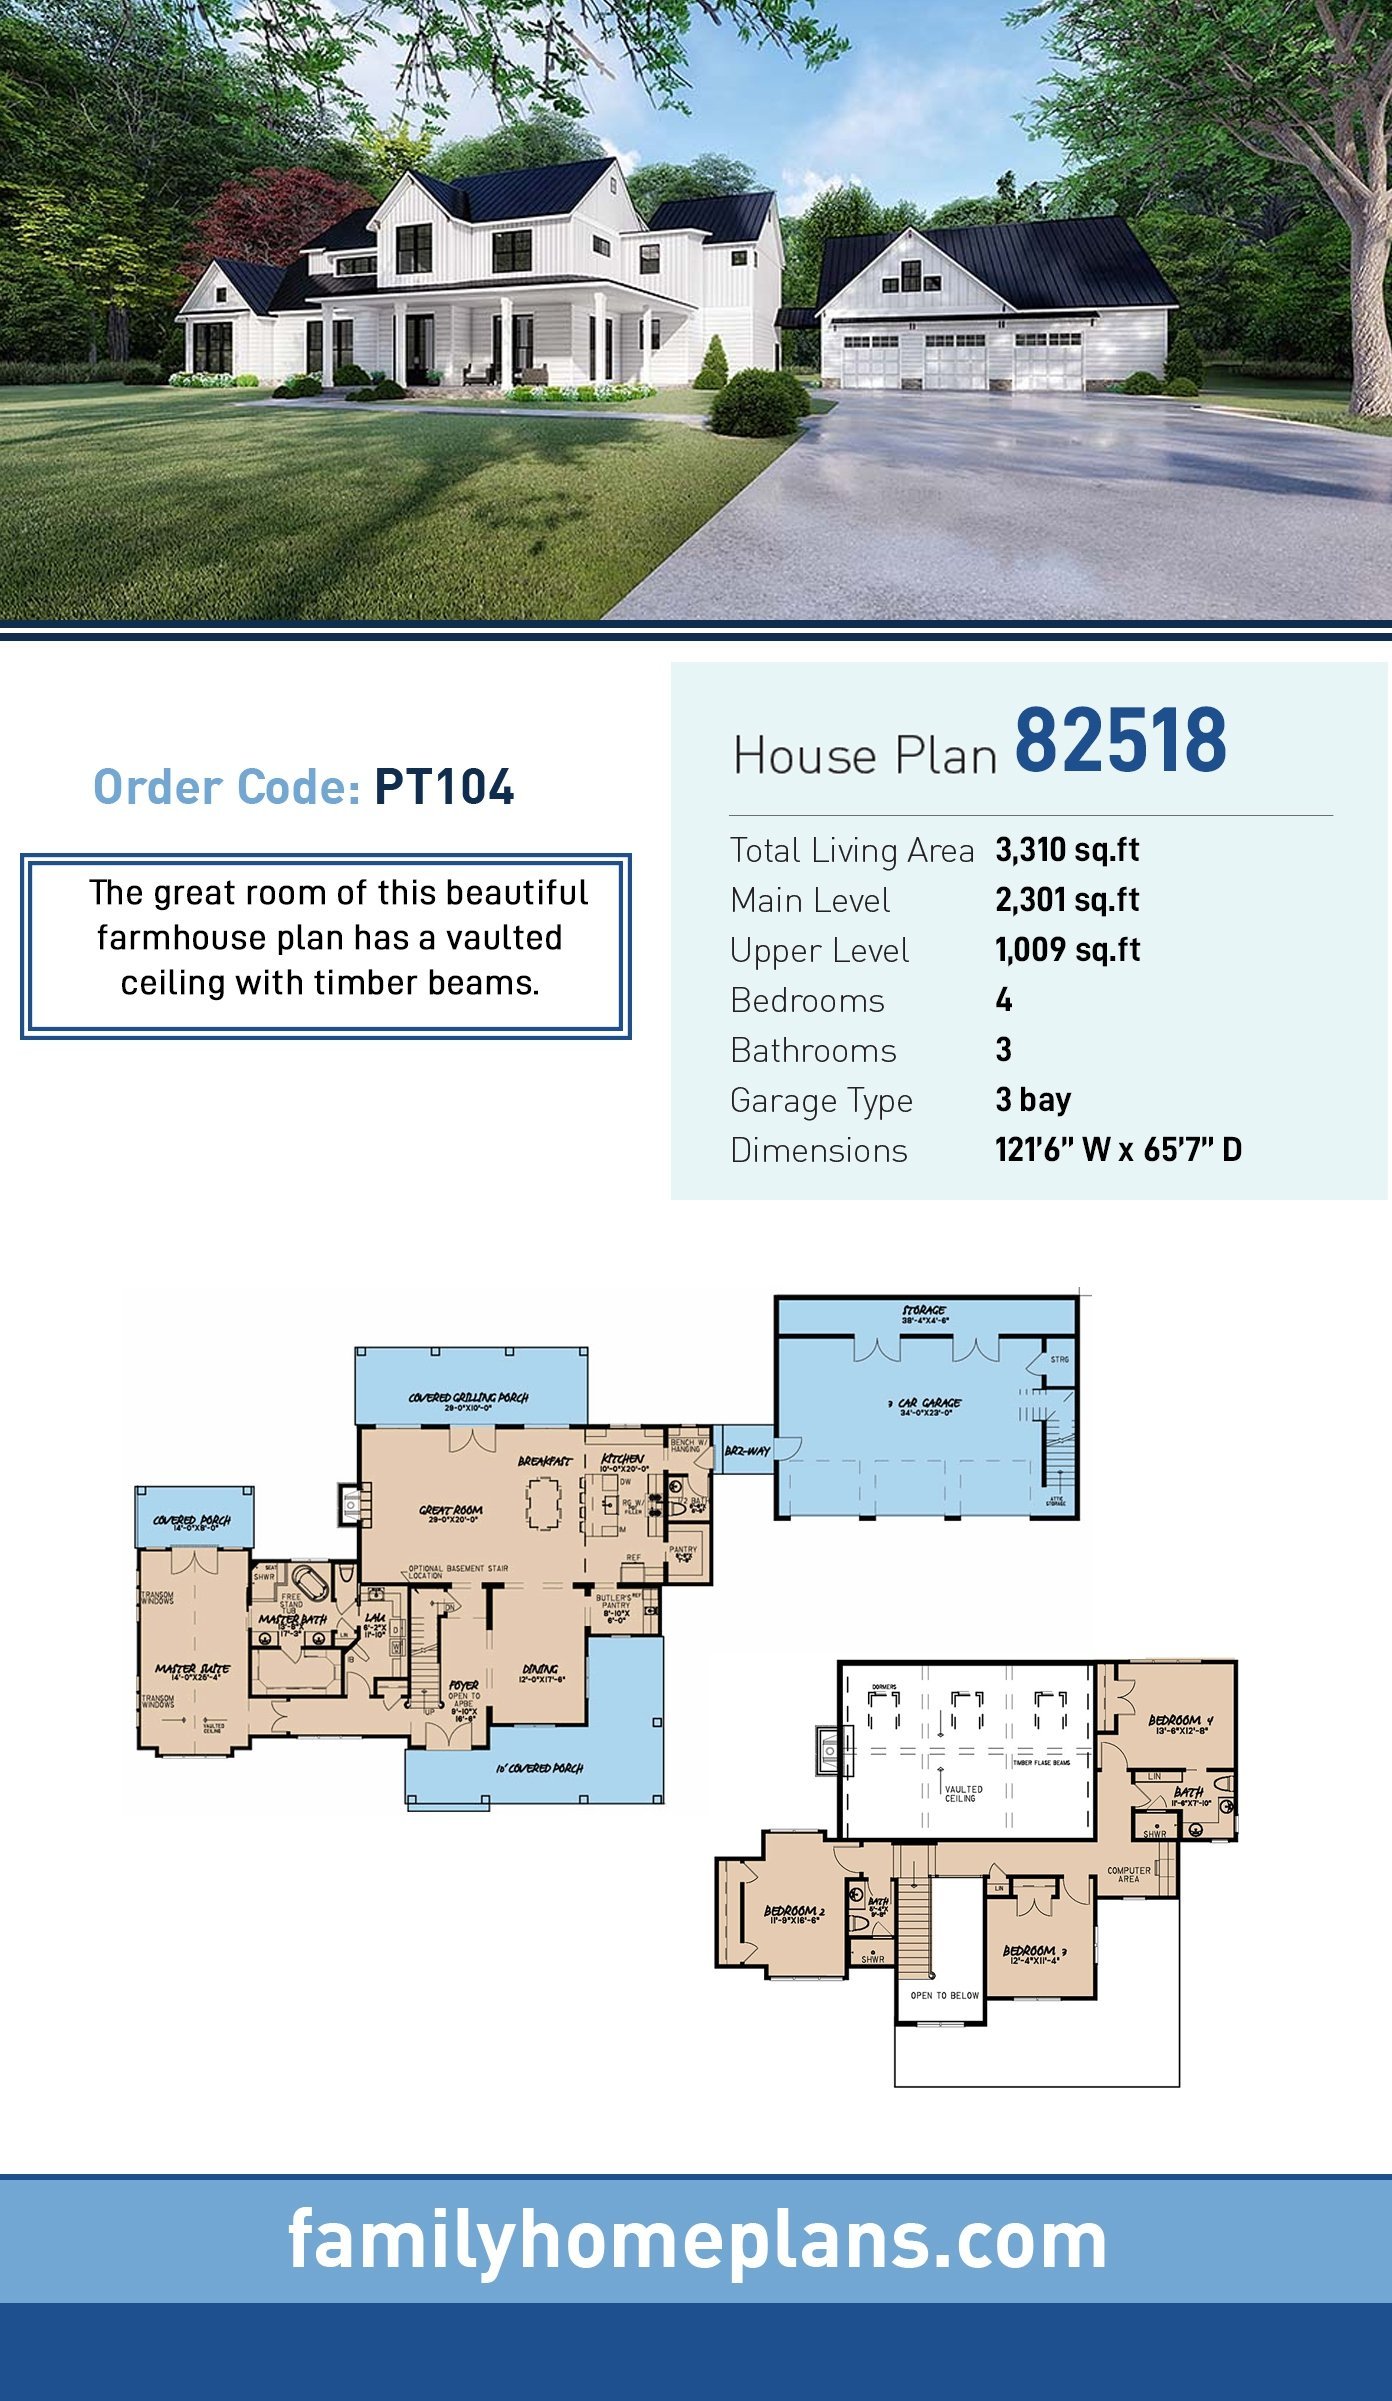 House Plan 82518